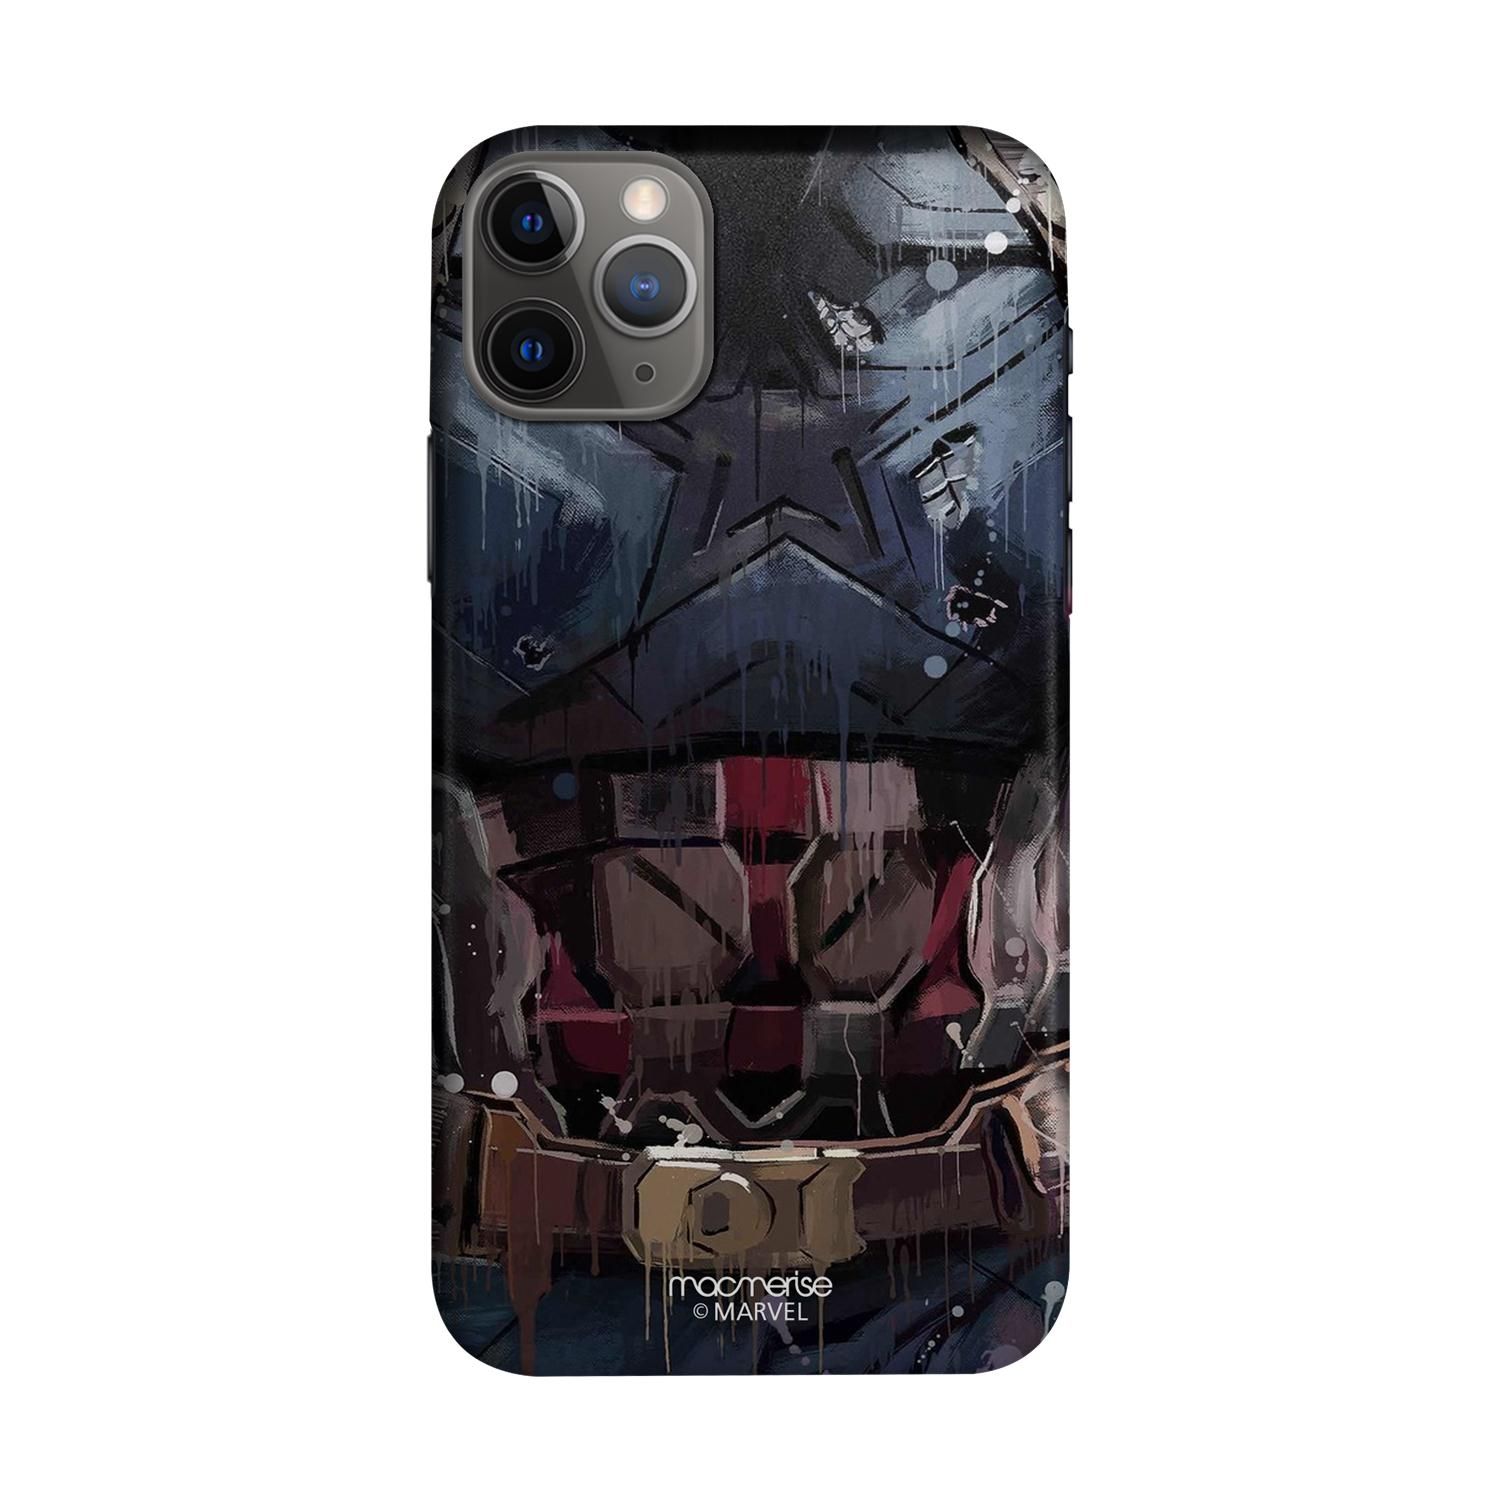 Buy Grunge Suit Steve - Sleek Phone Case for iPhone 11 Pro Max Online